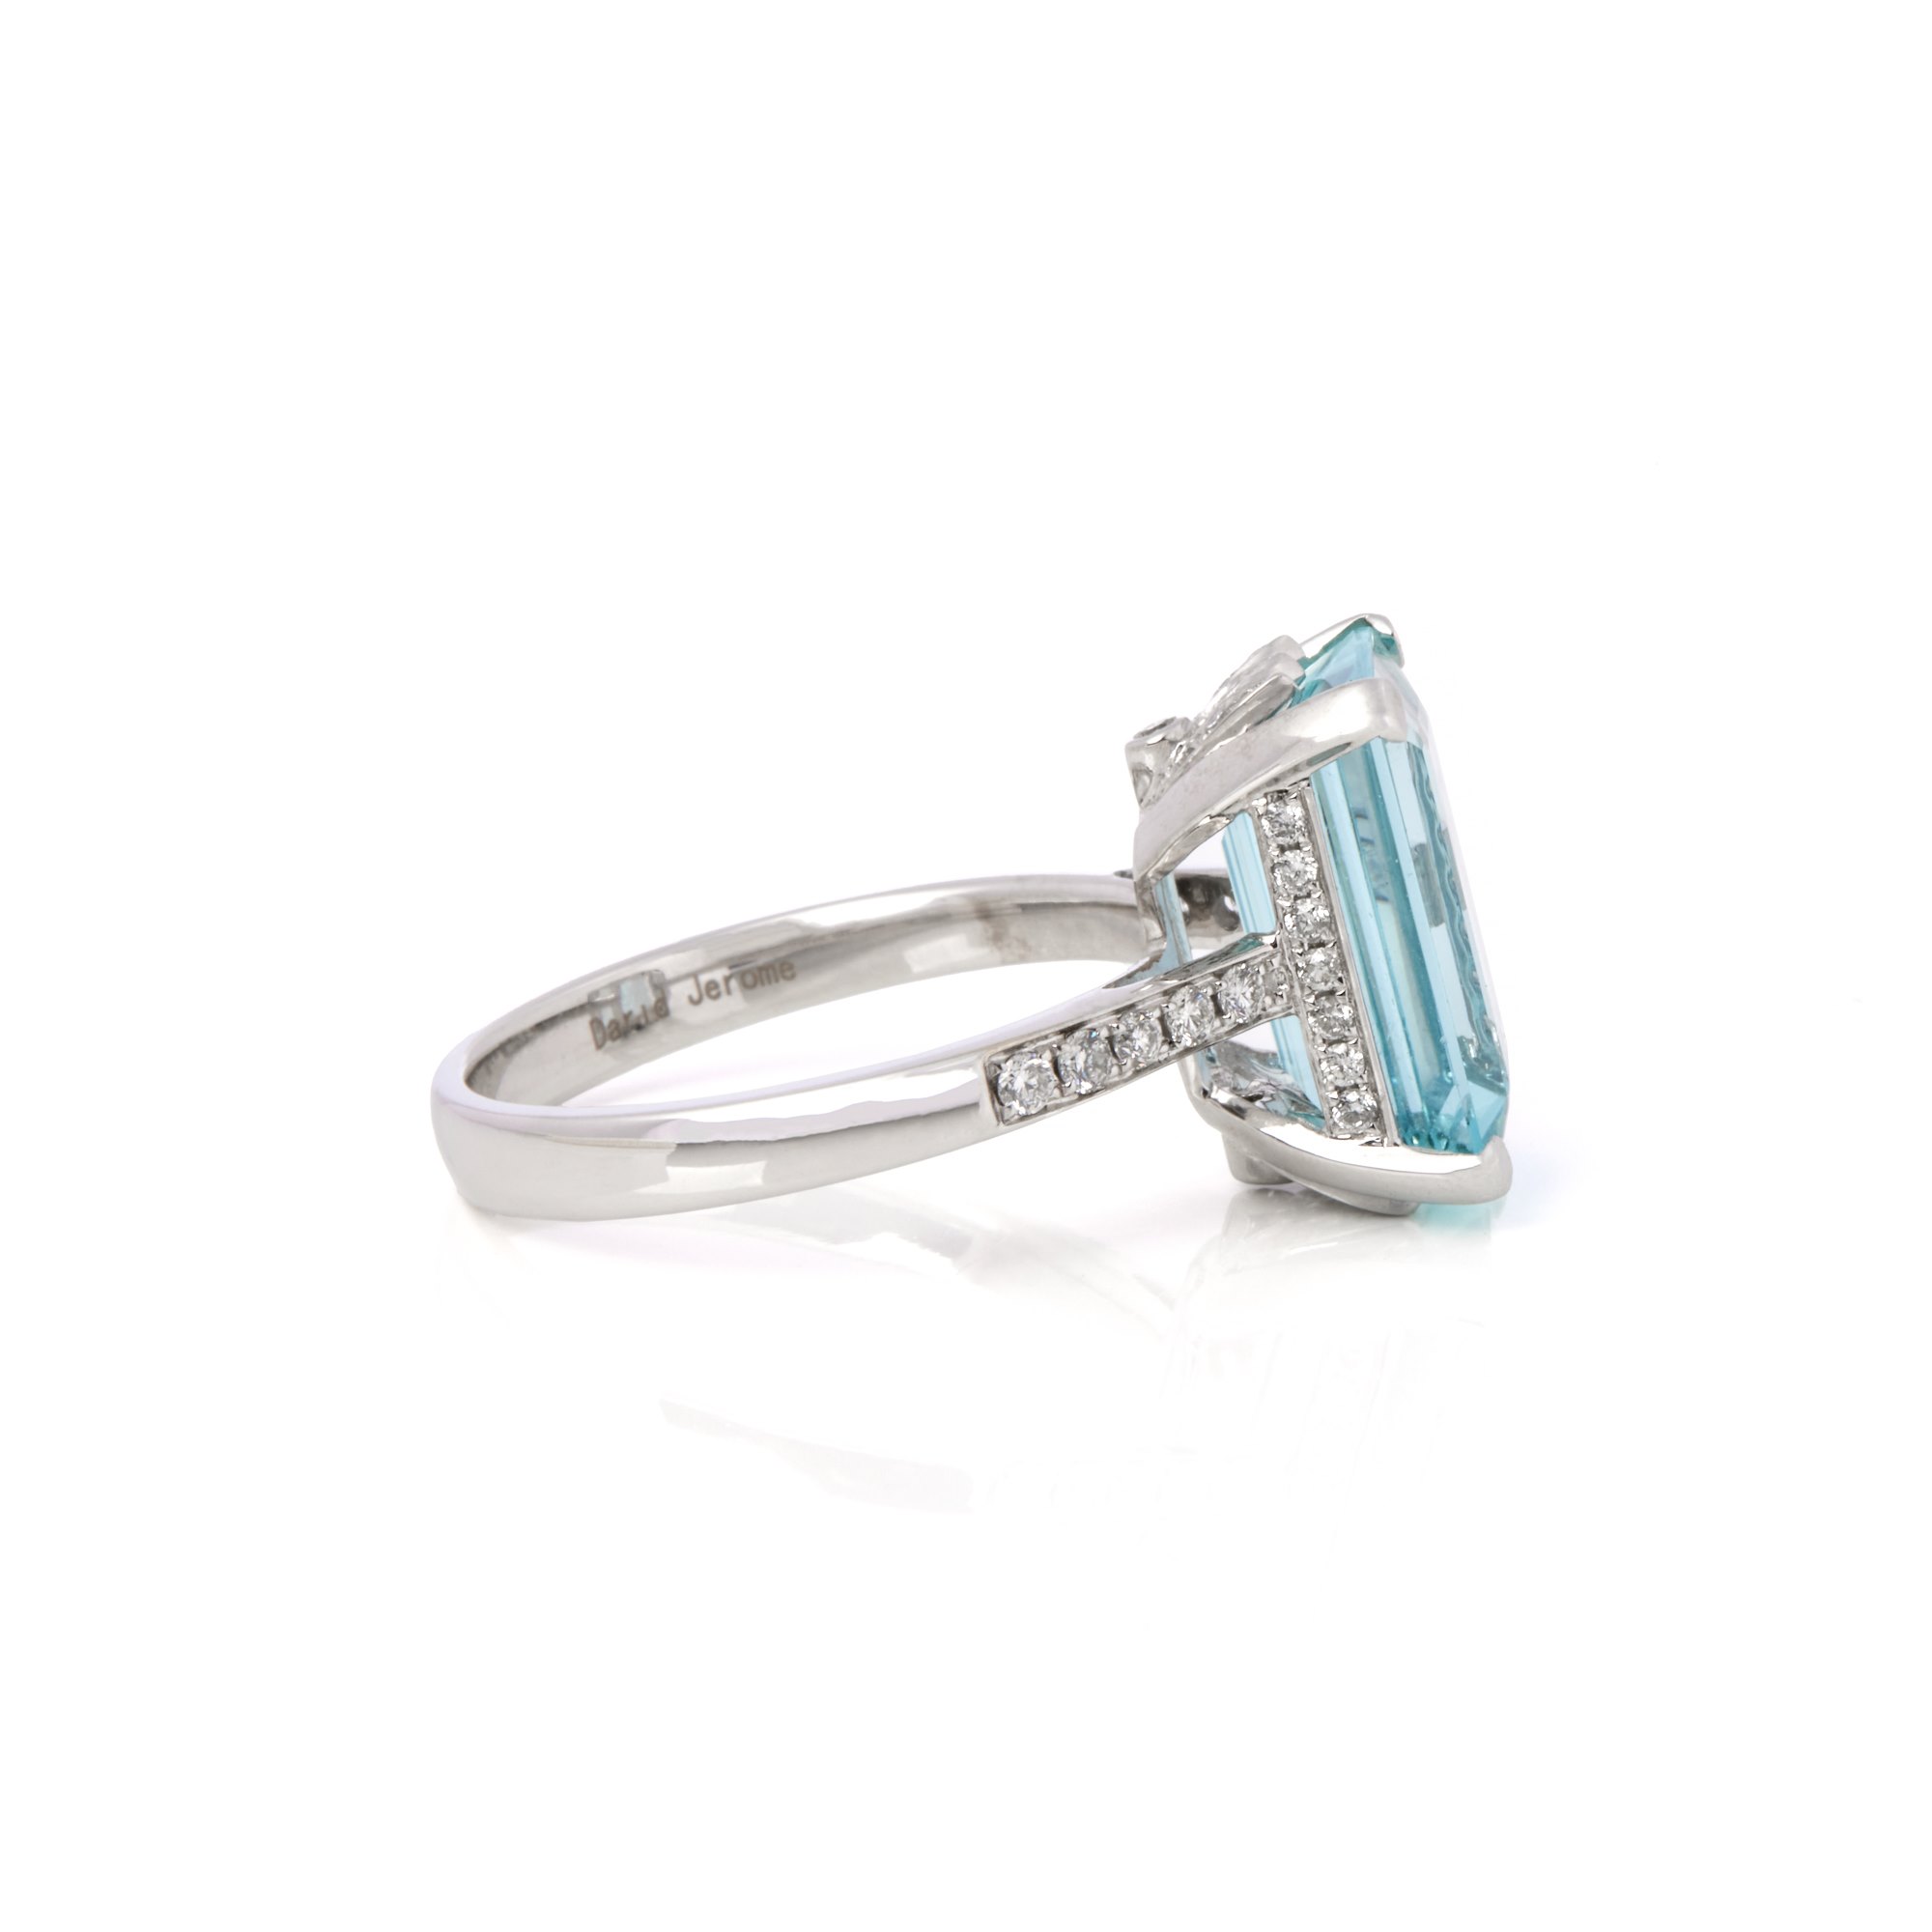 David Jerome Certified 5.61ct Emerald Cut Aquamarine and Diamond Ring